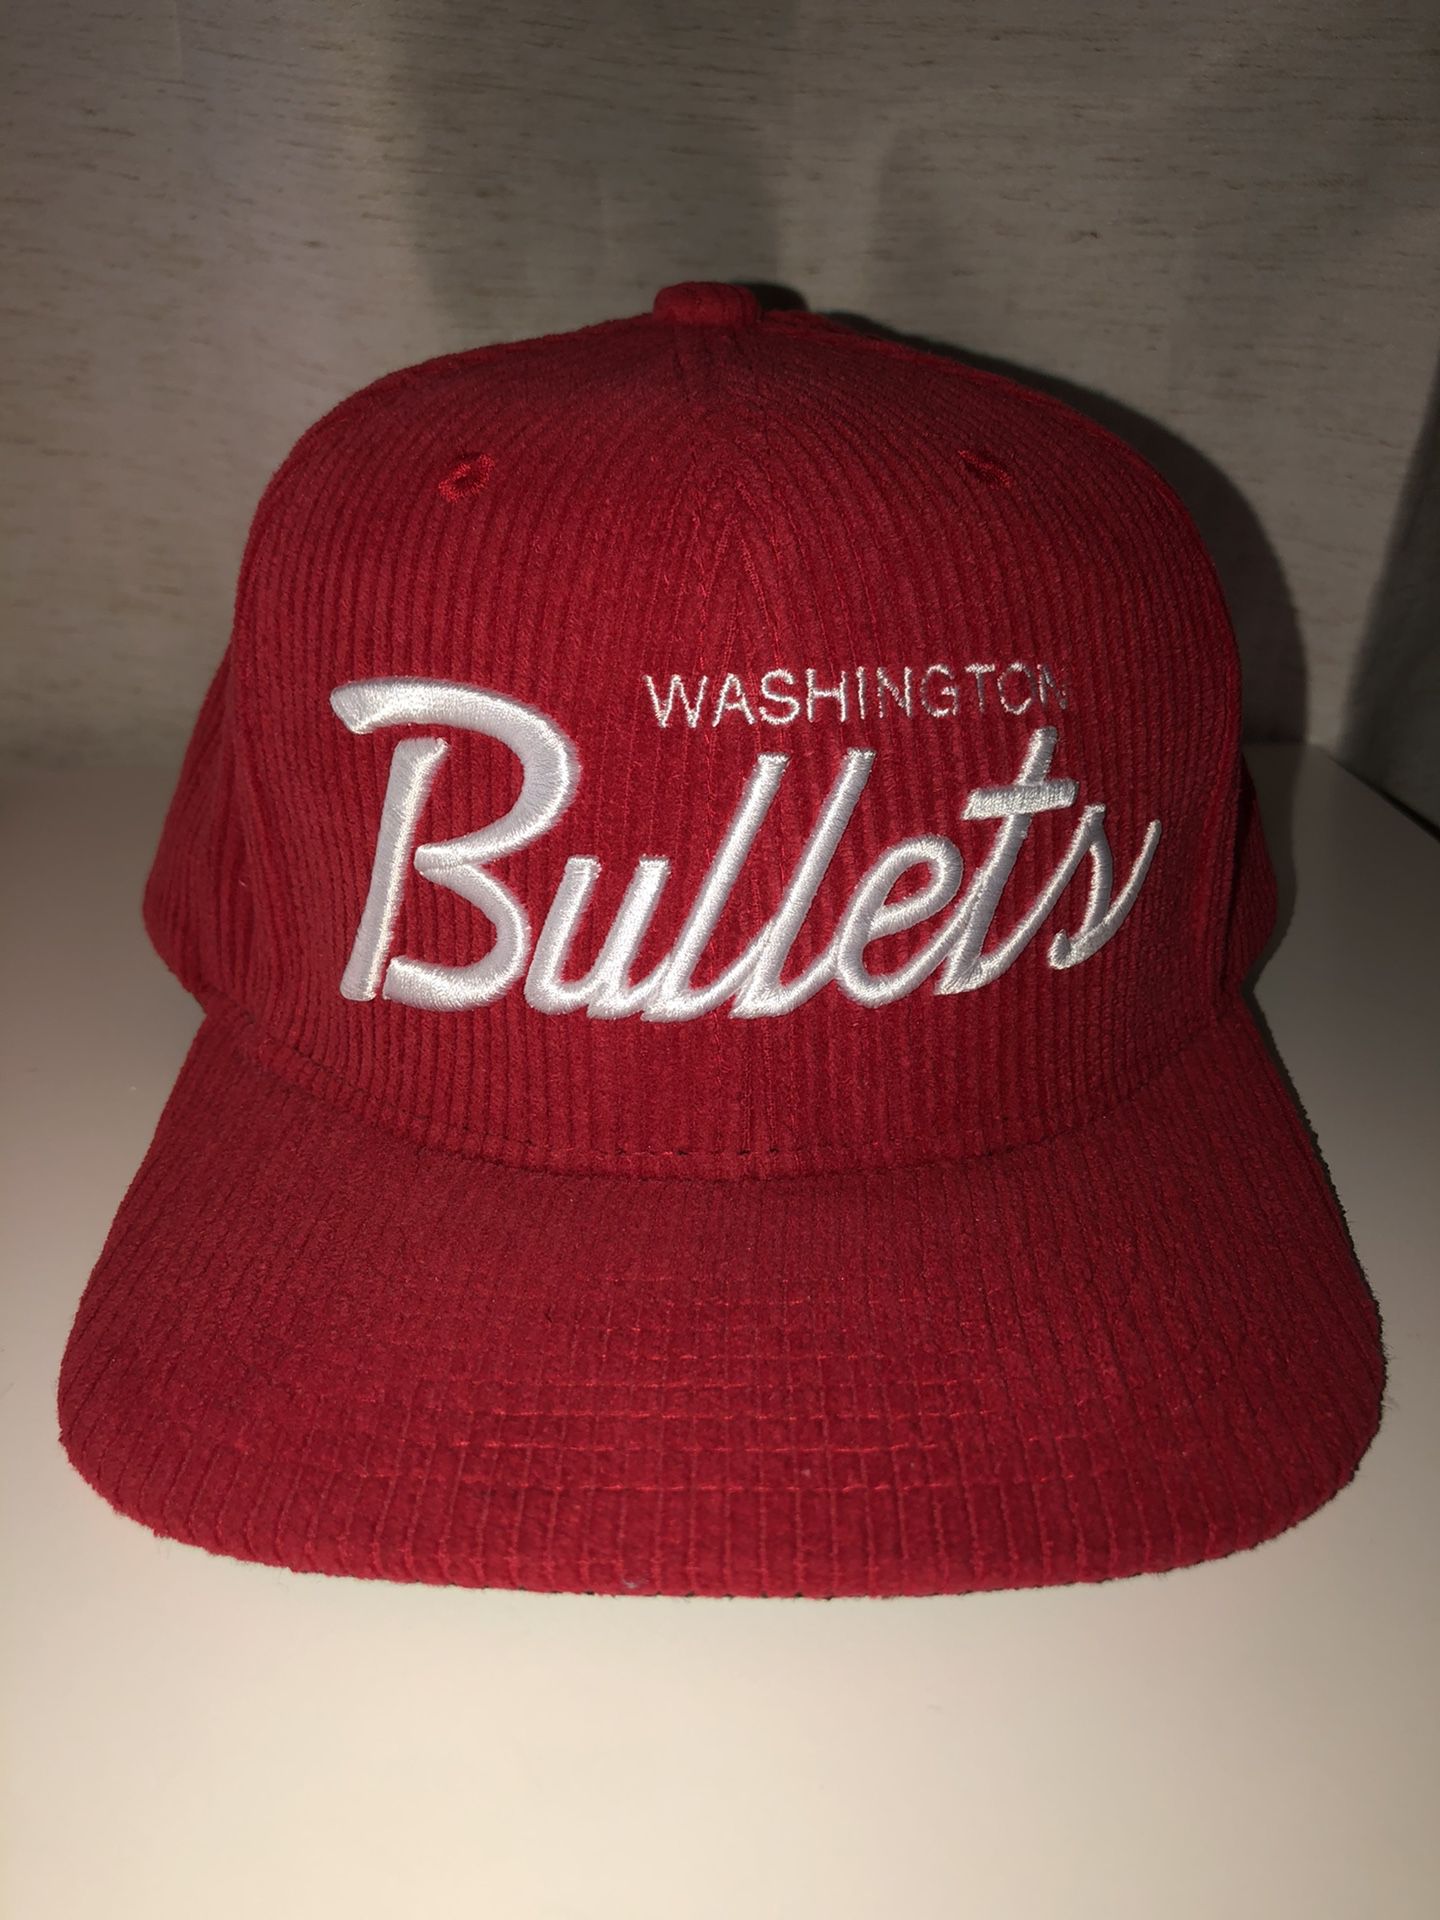 Washington Bullets hat